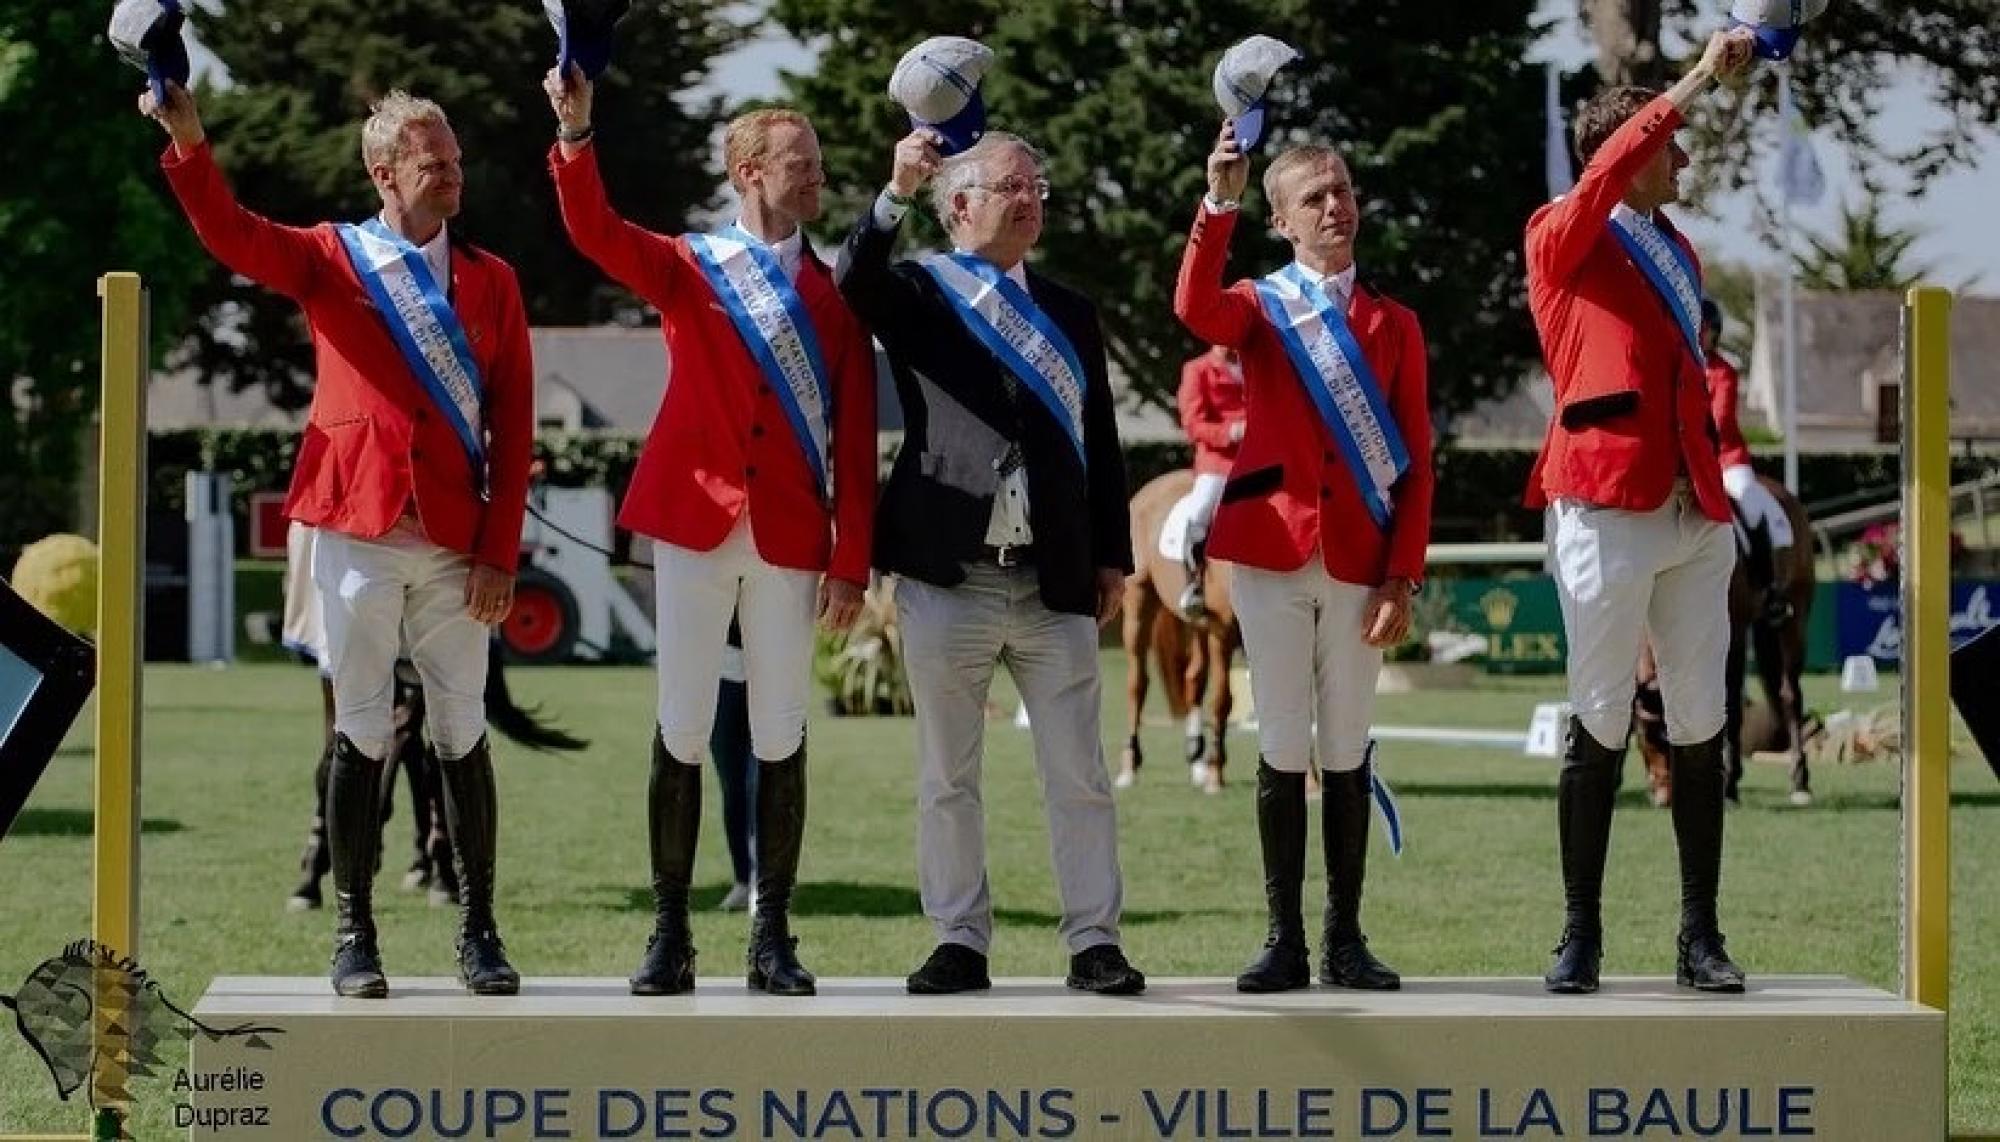 Belgium: Winners in La Baule